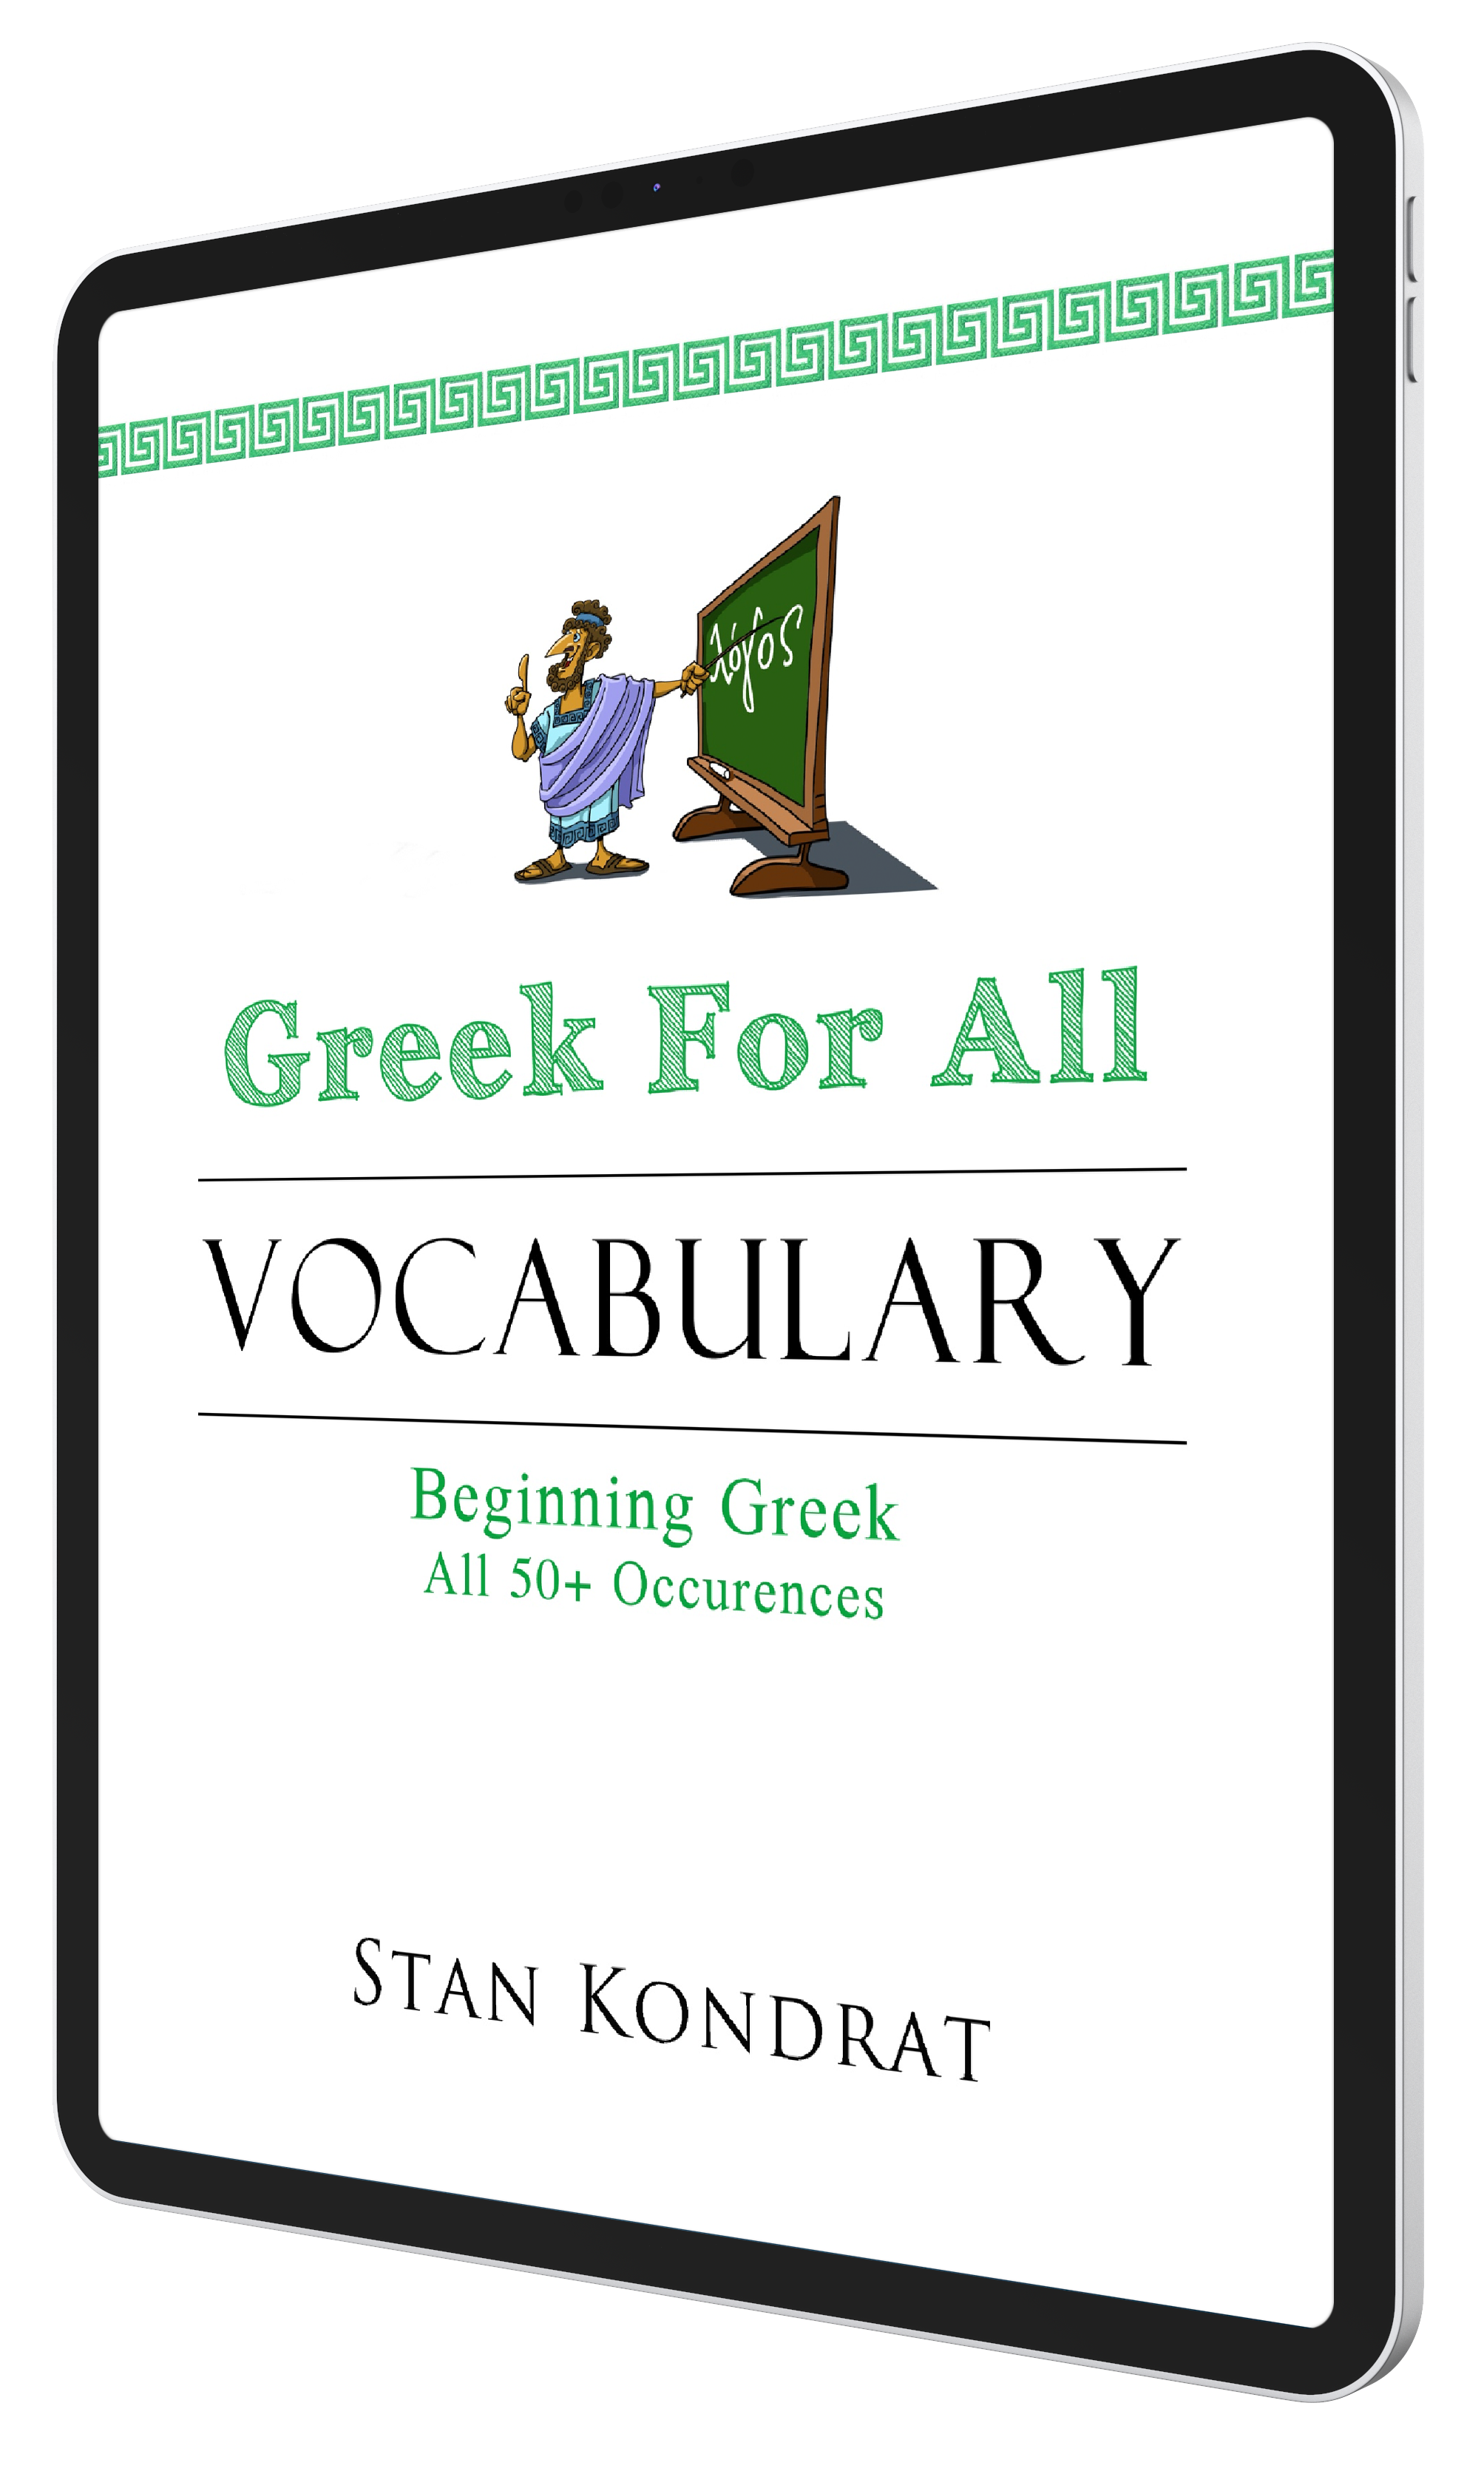 Greek For All beginning Greek vocabulary